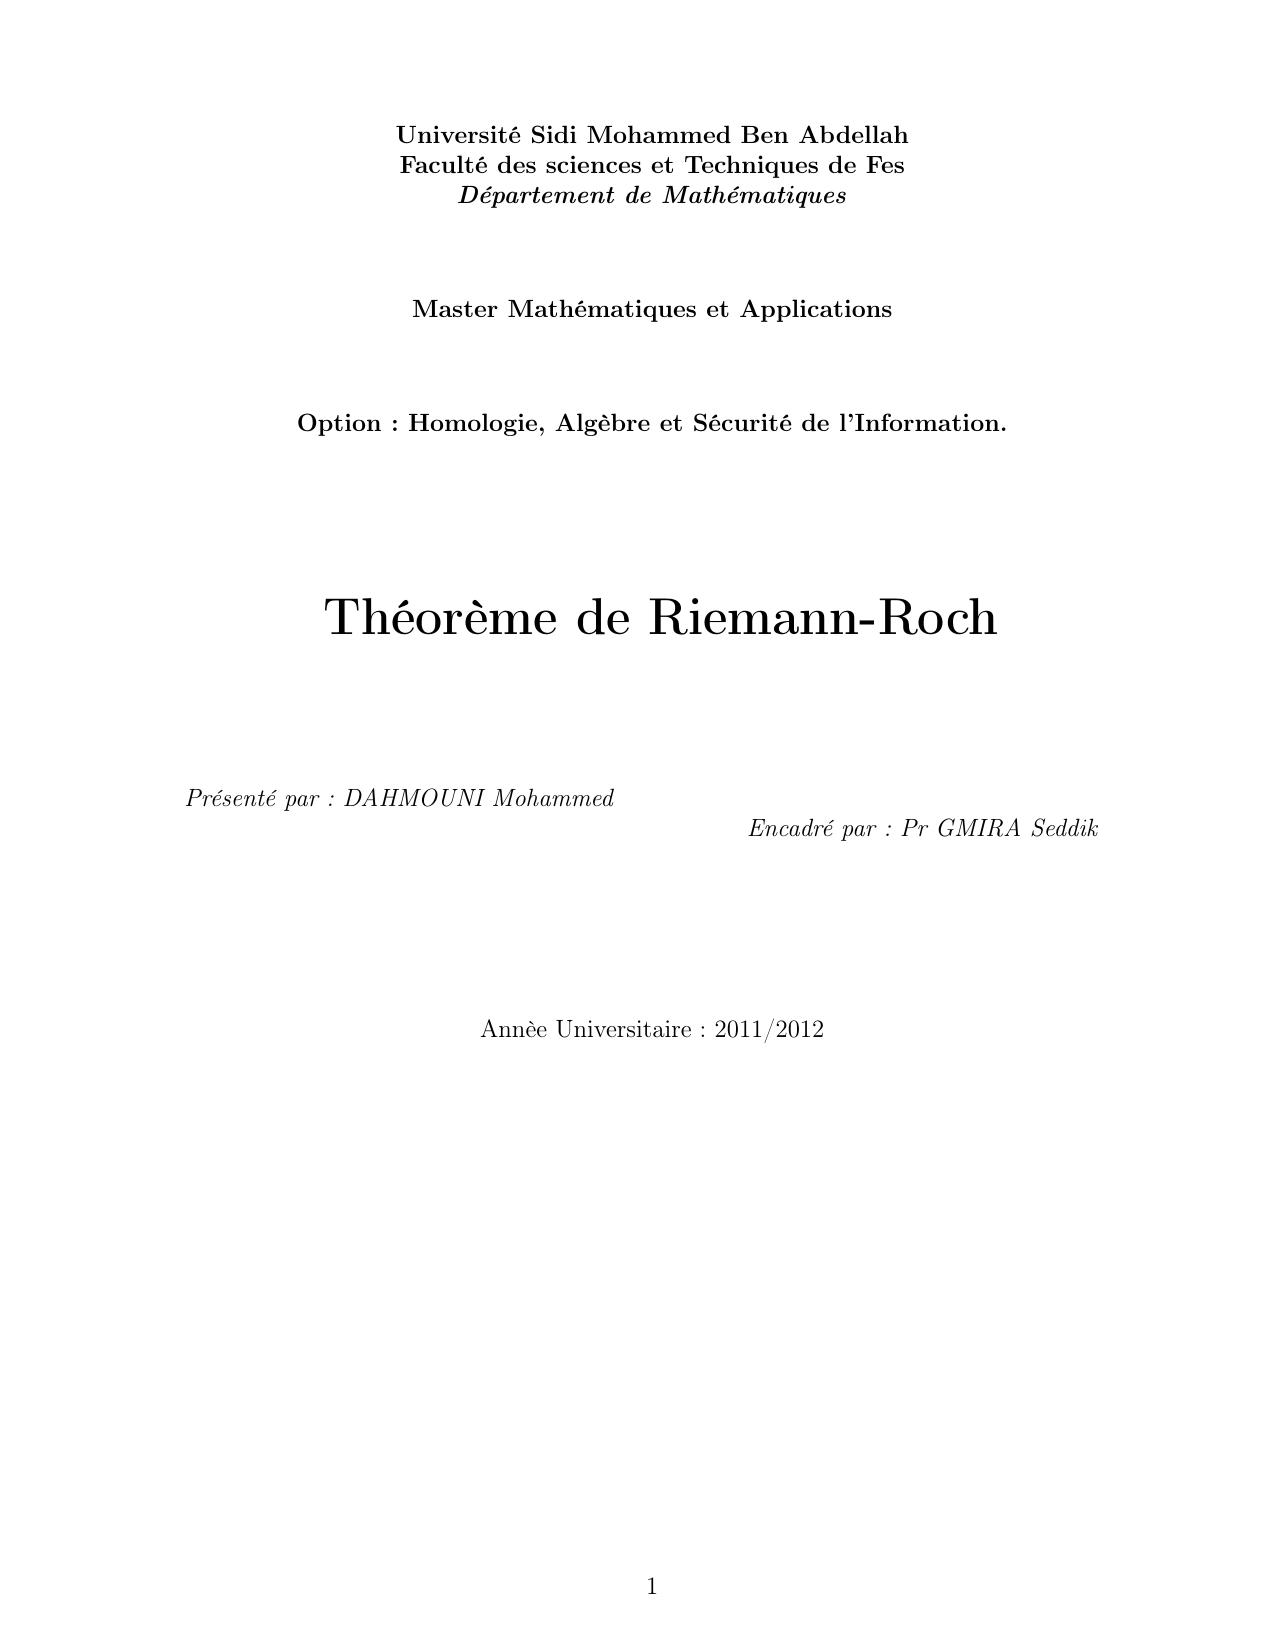 Théorème de Riemann-Roch